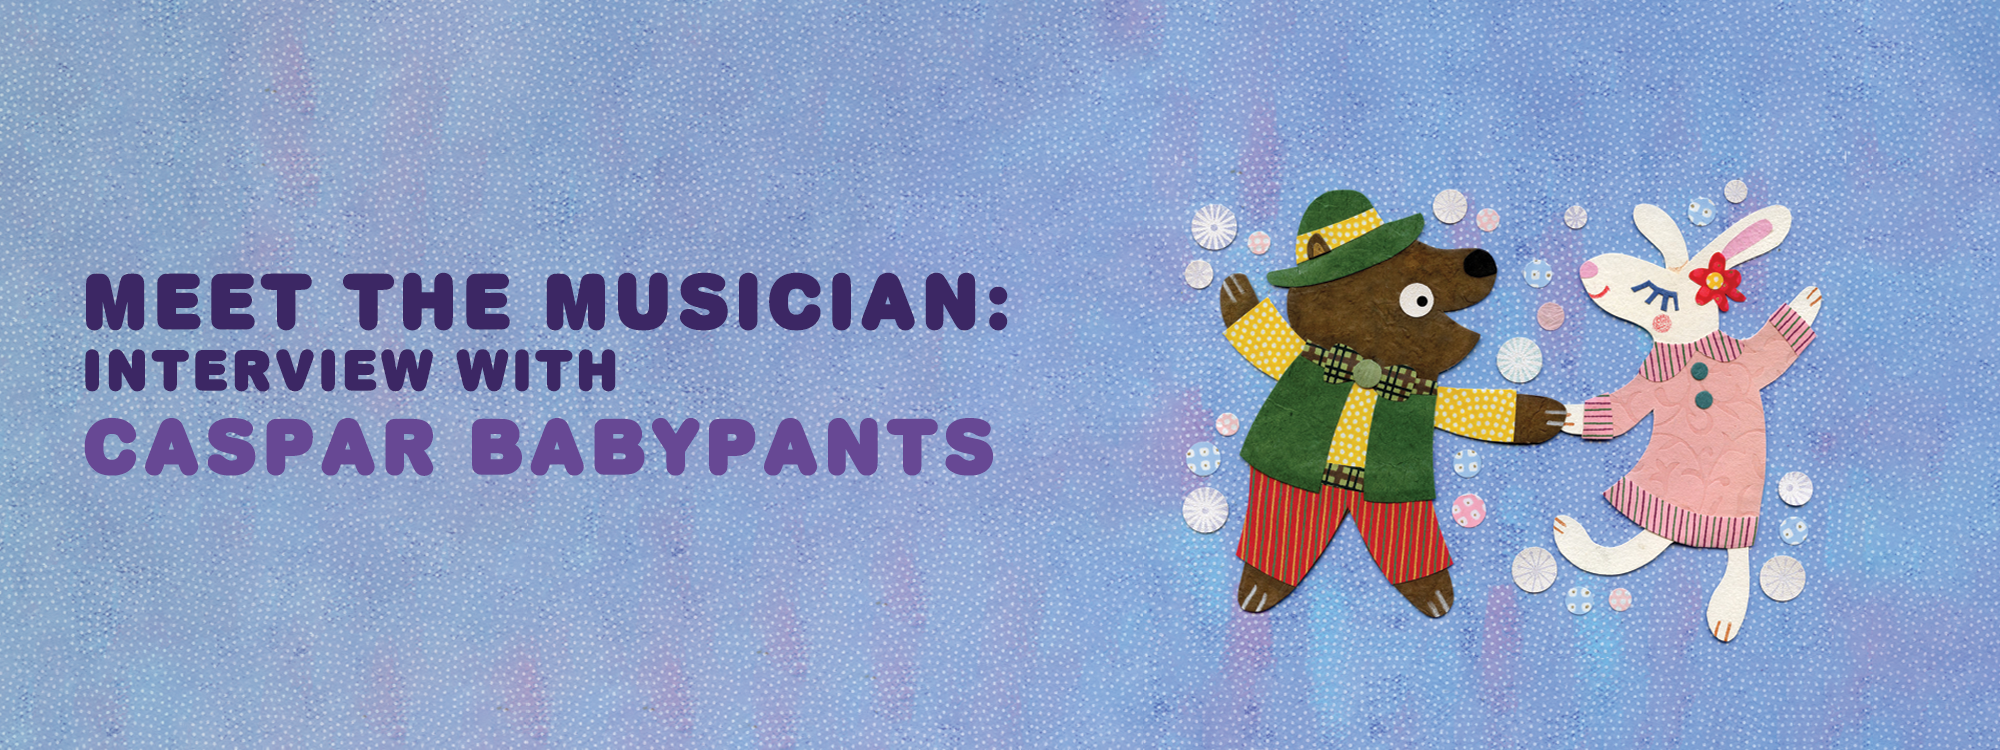 Meet The Musician: Interview with Caspar Babypants